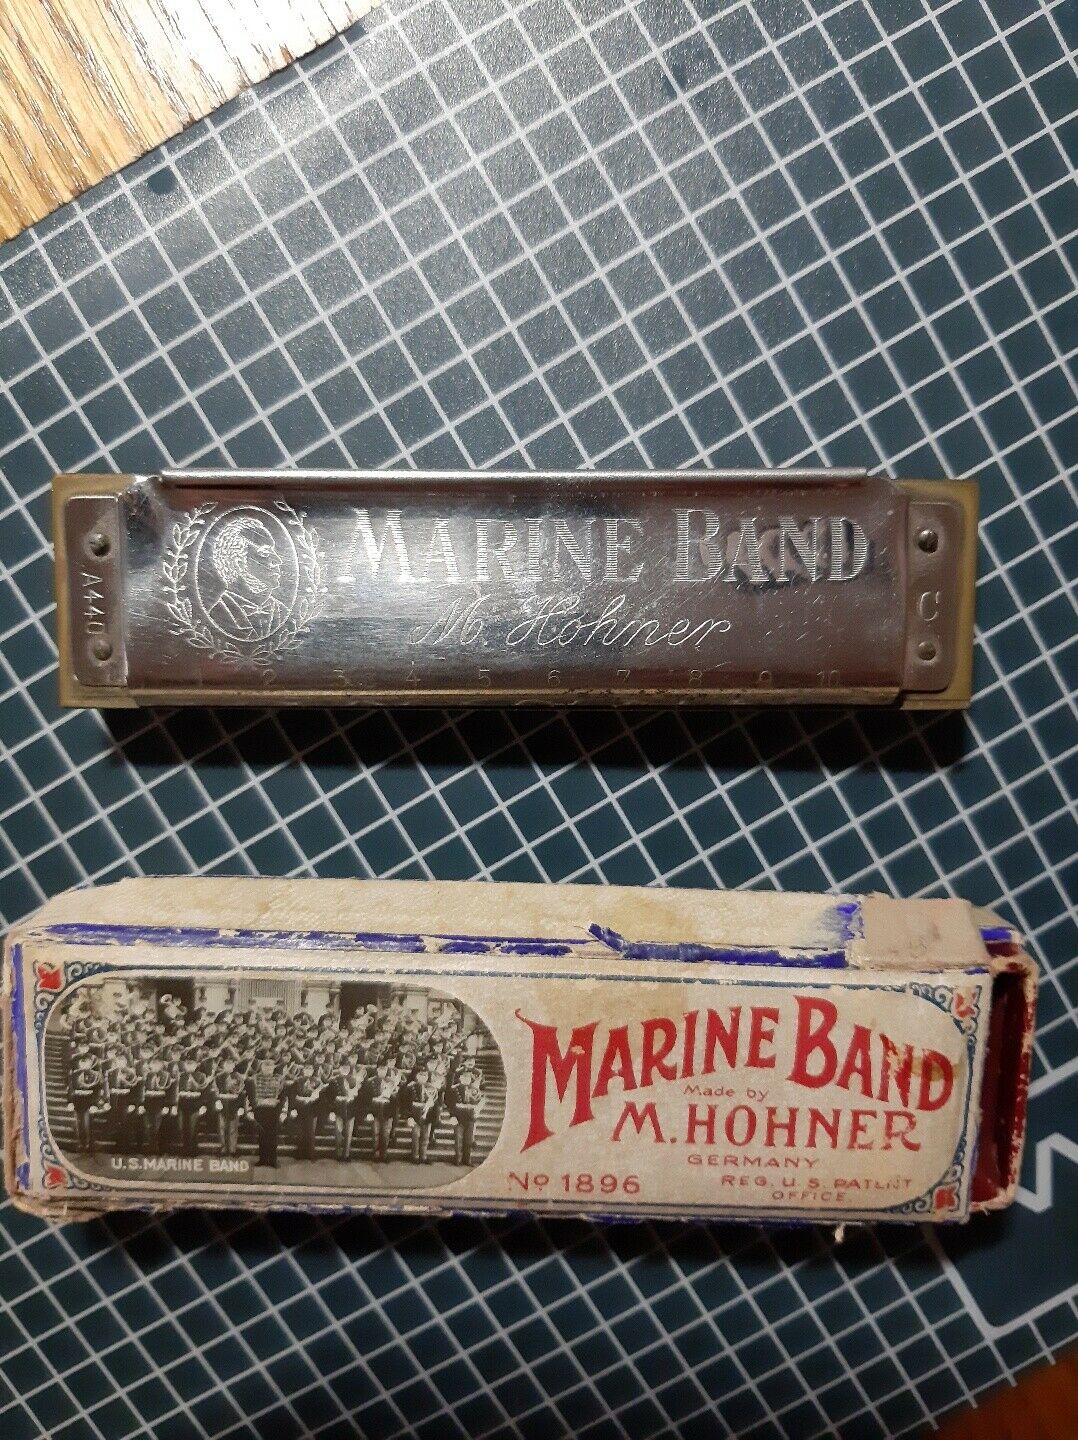 Marine Band M. Hohner No 1896 Harmonica Germany Free Shipping